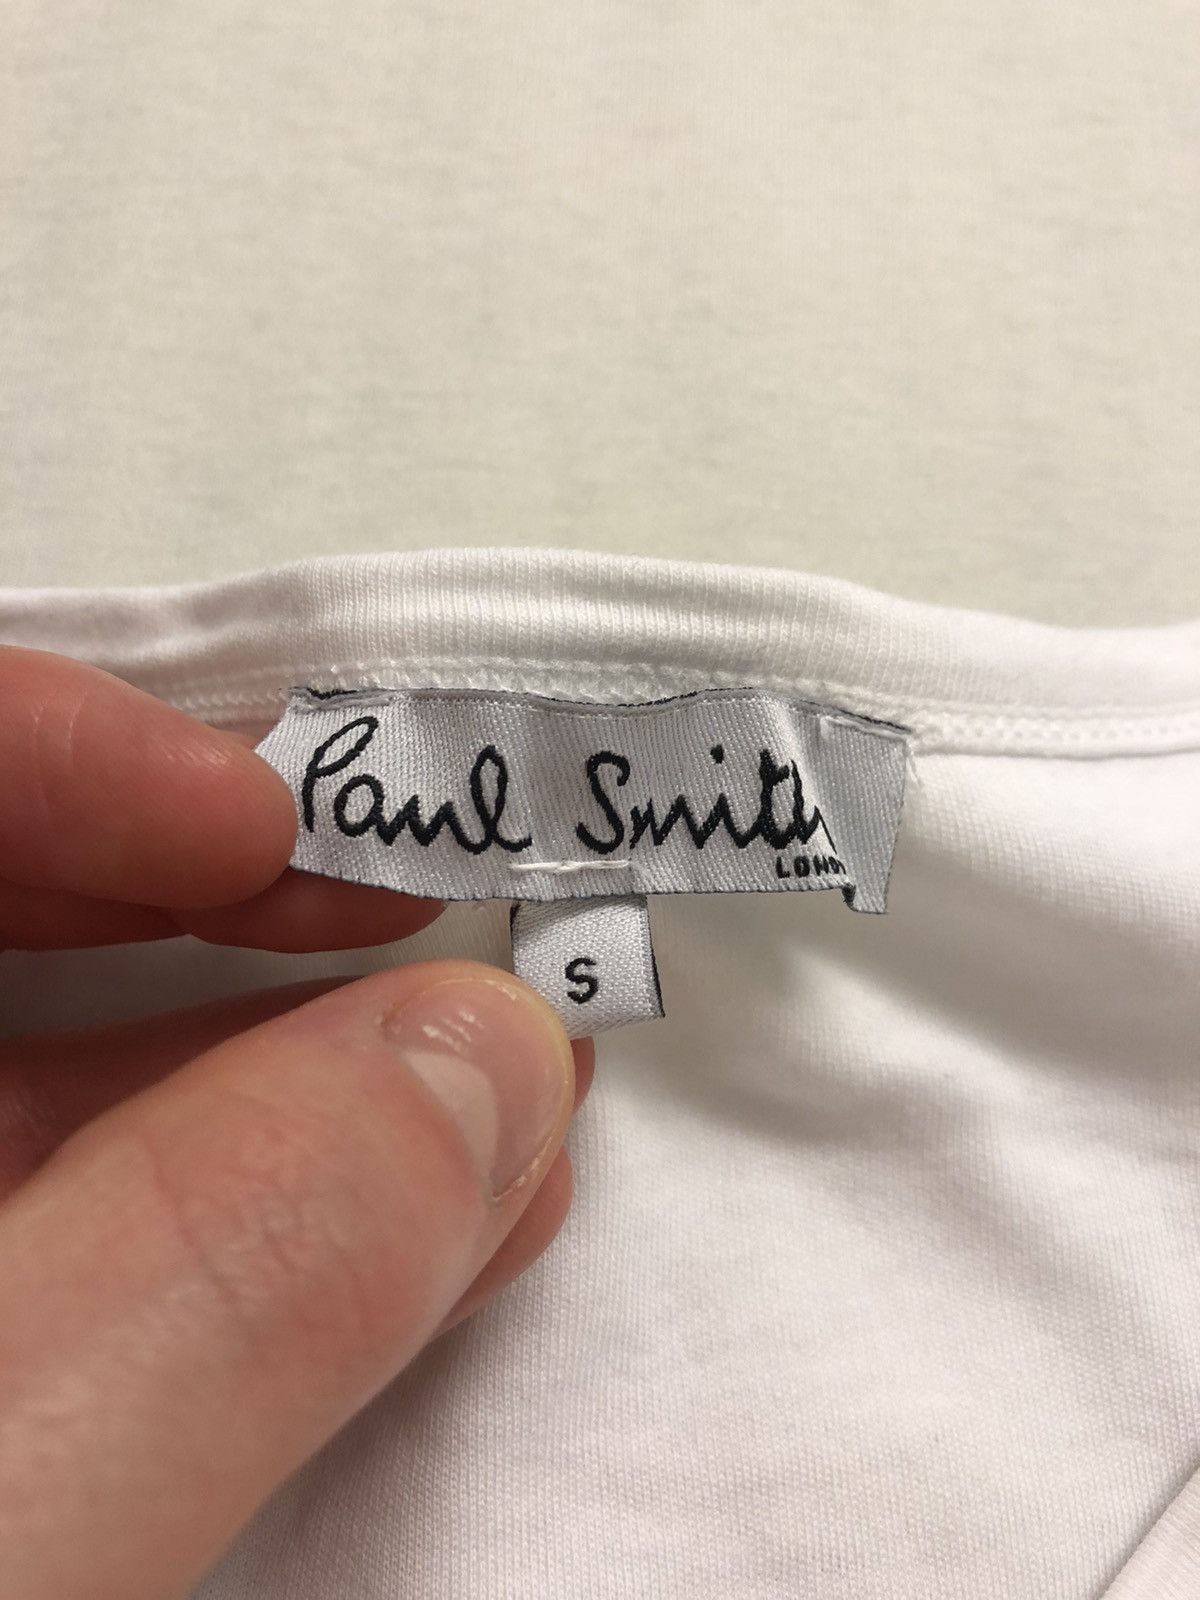 Vintage PAUL SMITH LONDON RARE VINTAGE DESIGN QUALITY TEE SHIRT Size US S / EU 44-46 / 1 - 3 Thumbnail